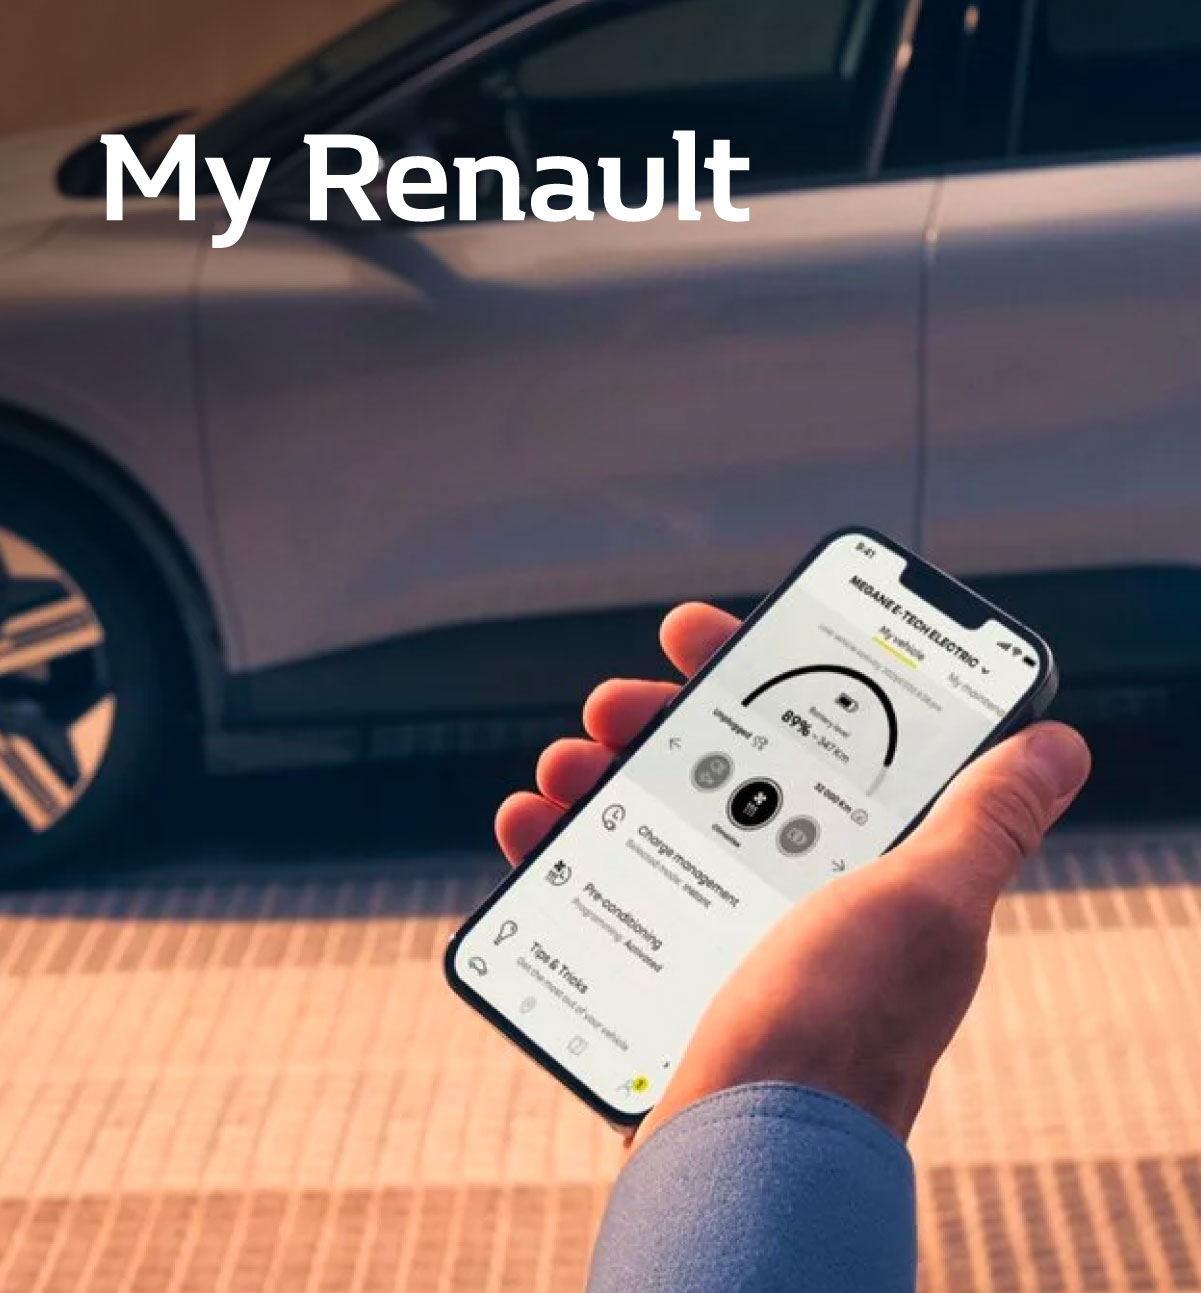 Renault App